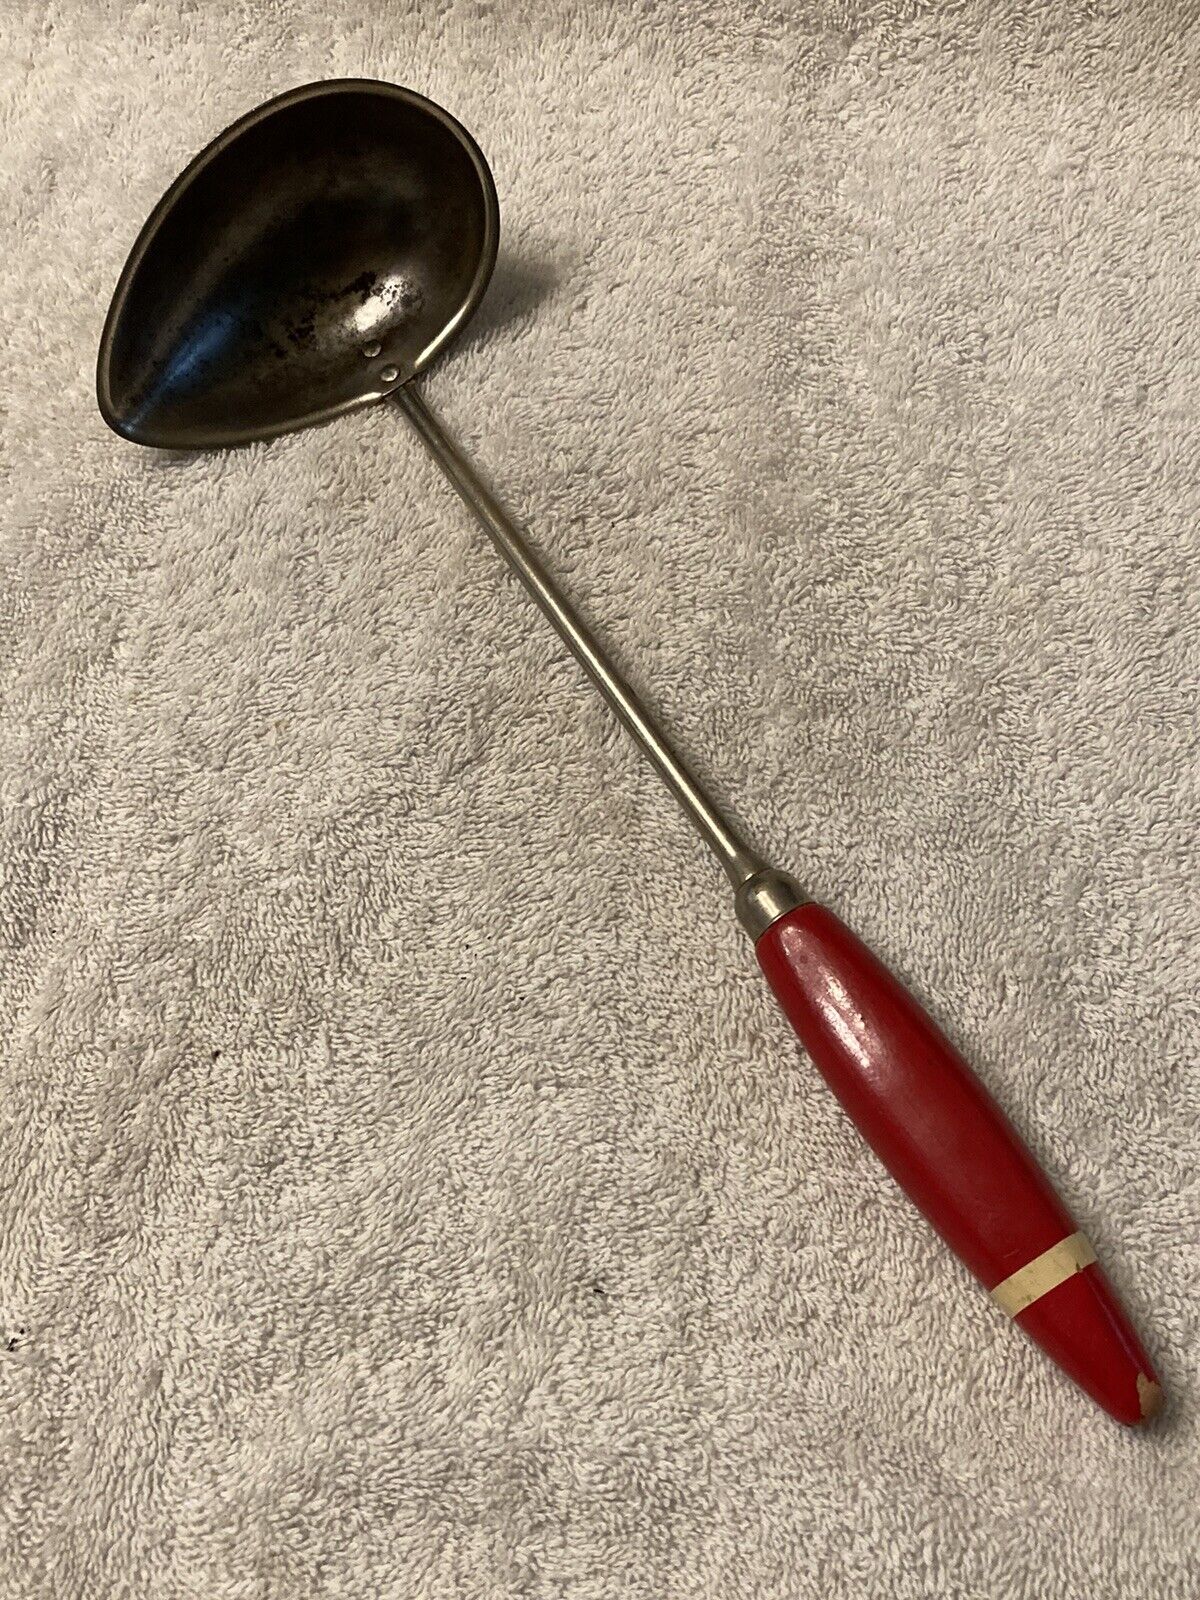 Vintage A & J Red Handle Serving Ladle, Teardrop, Wood Handle, Made in U.S.A.